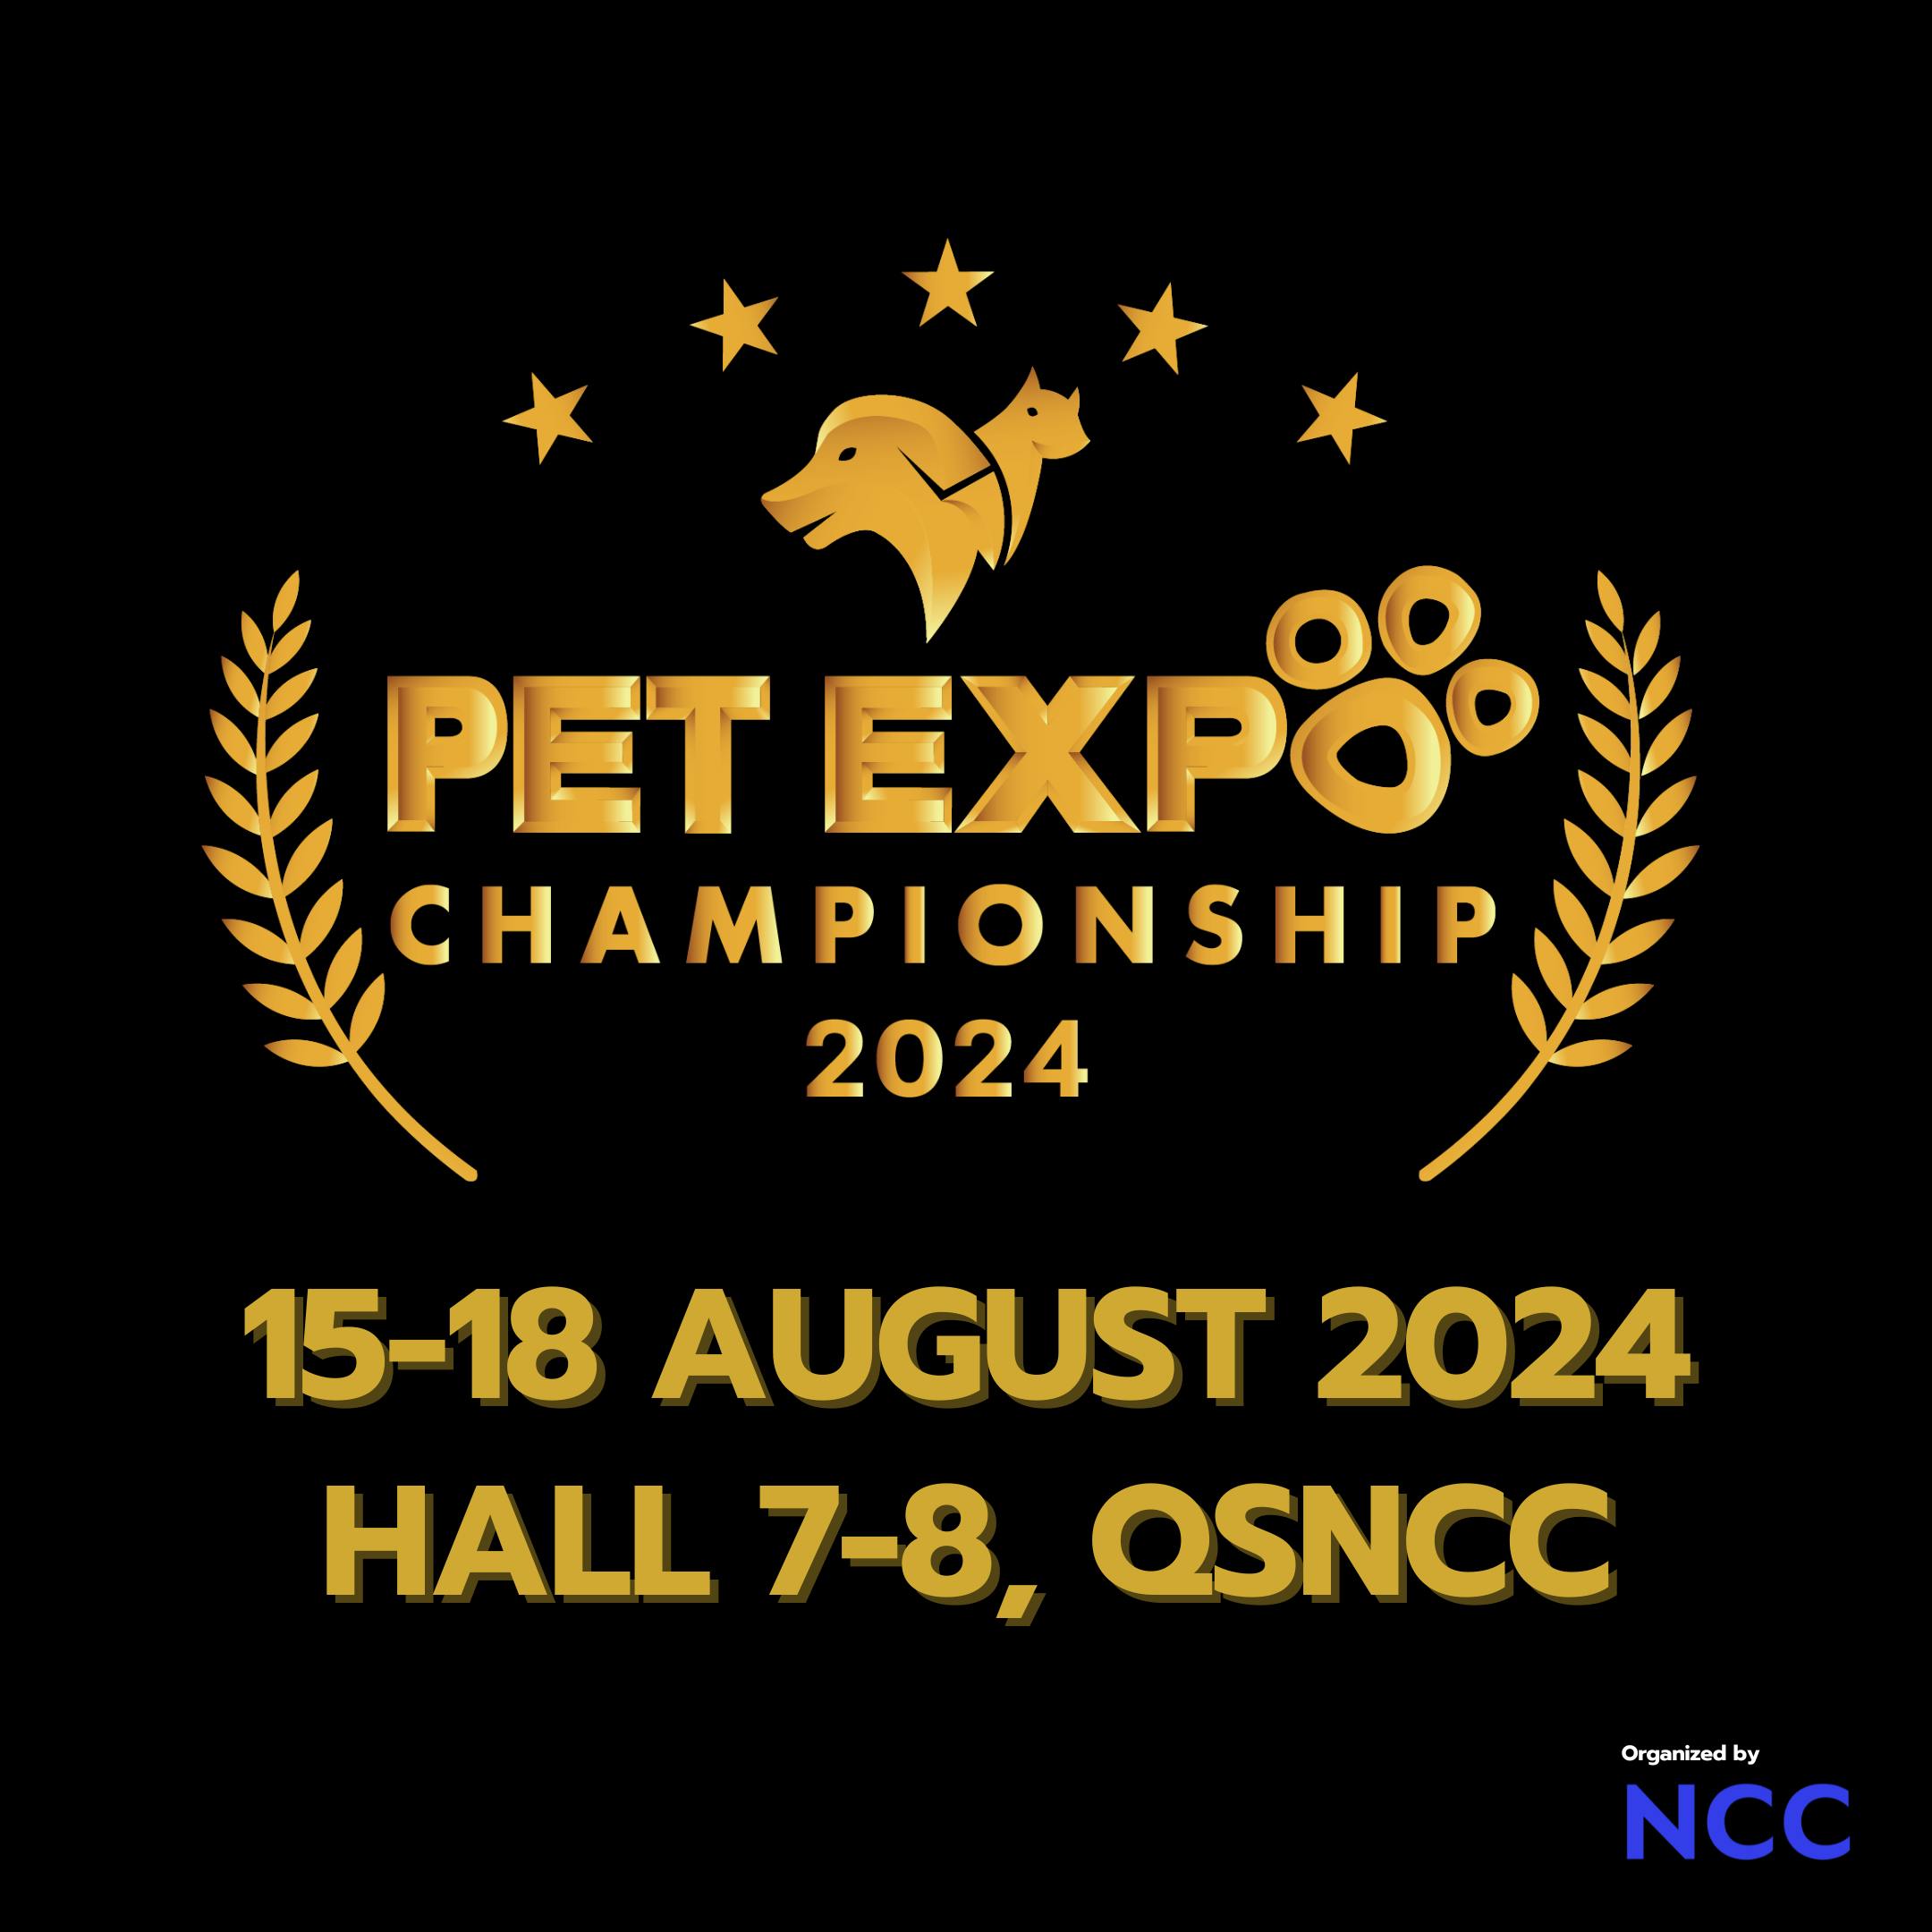 Pet Expo Championship 2024